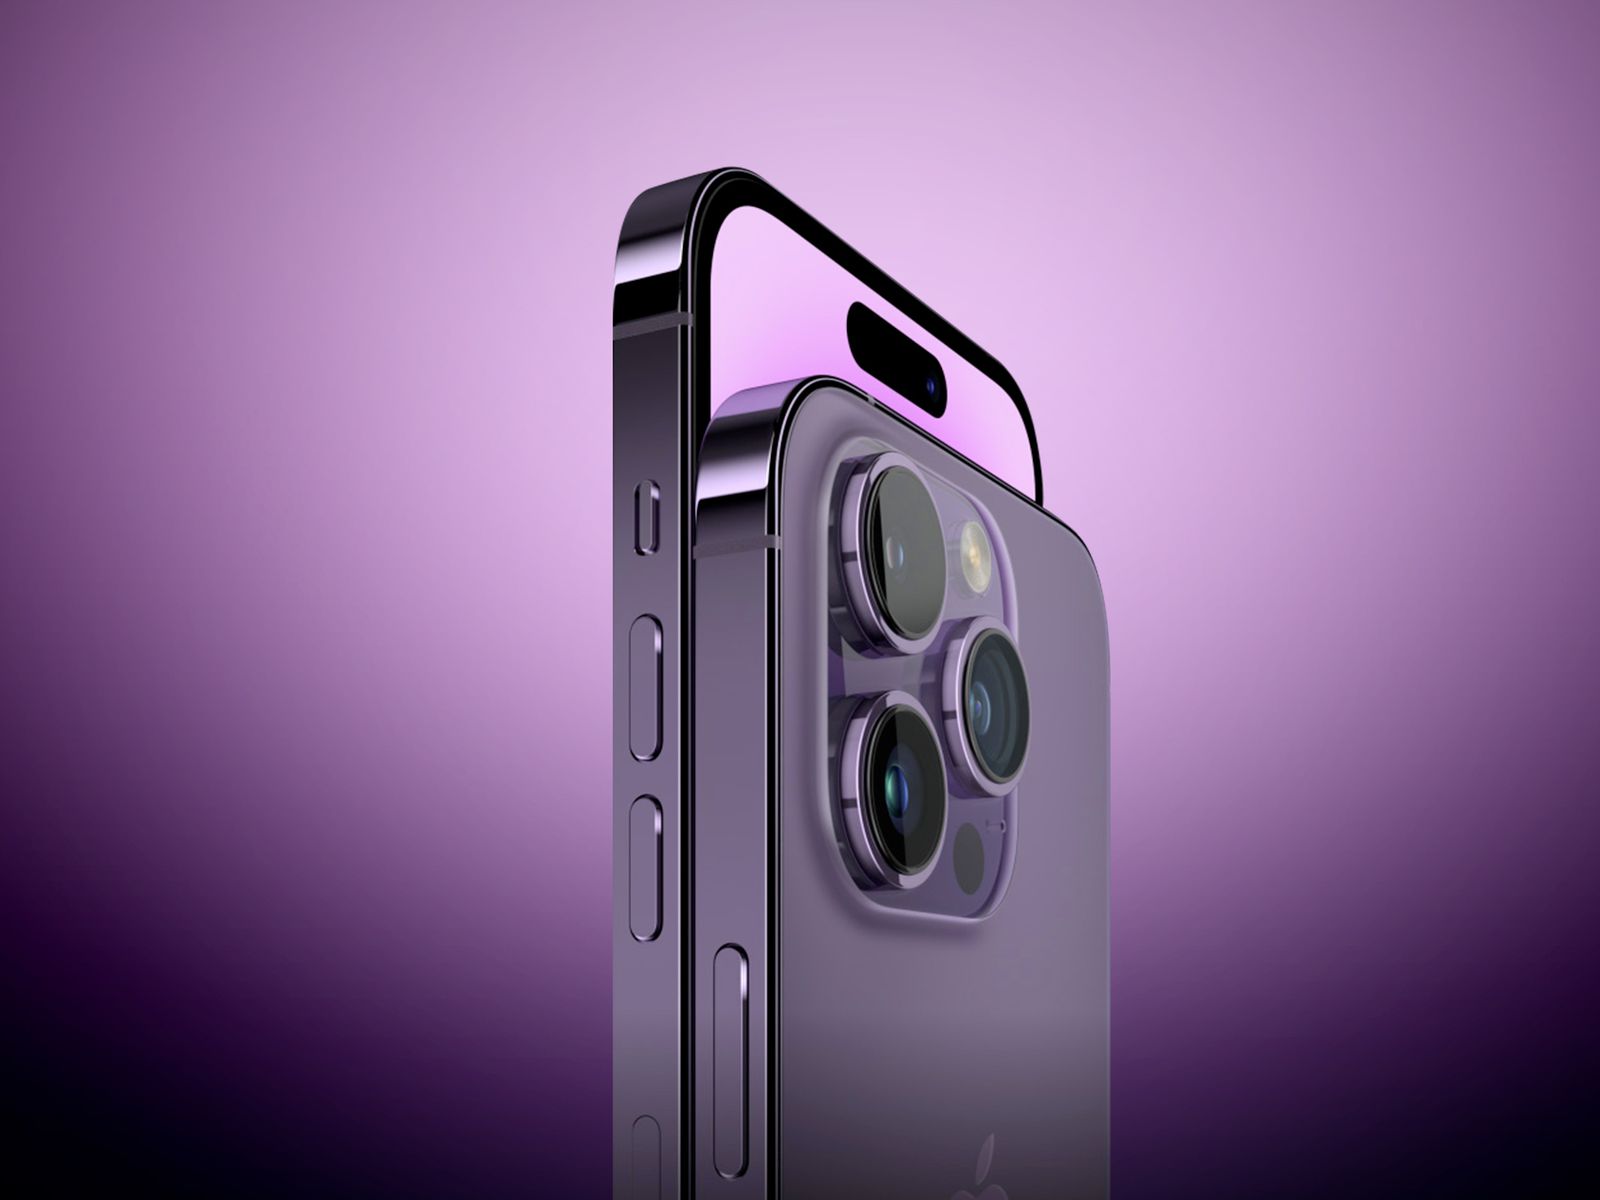 iphone-14-pro-purple-side-perspective-feature-purple.jpg